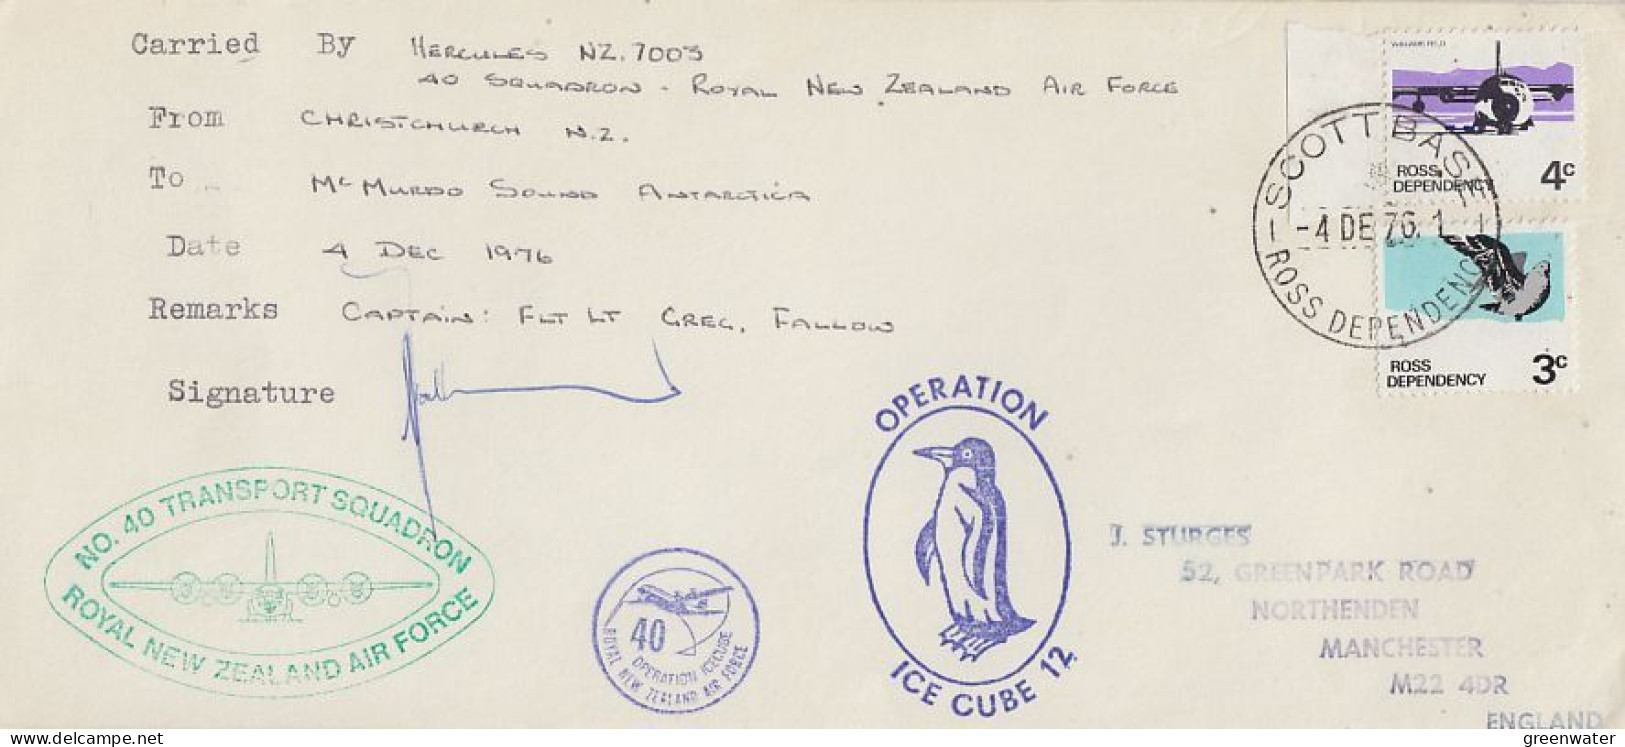 Ross Dependency Antarctic Flight From Christchurch To McMurdo 4 DEC 1976  (RO200) - Briefe U. Dokumente